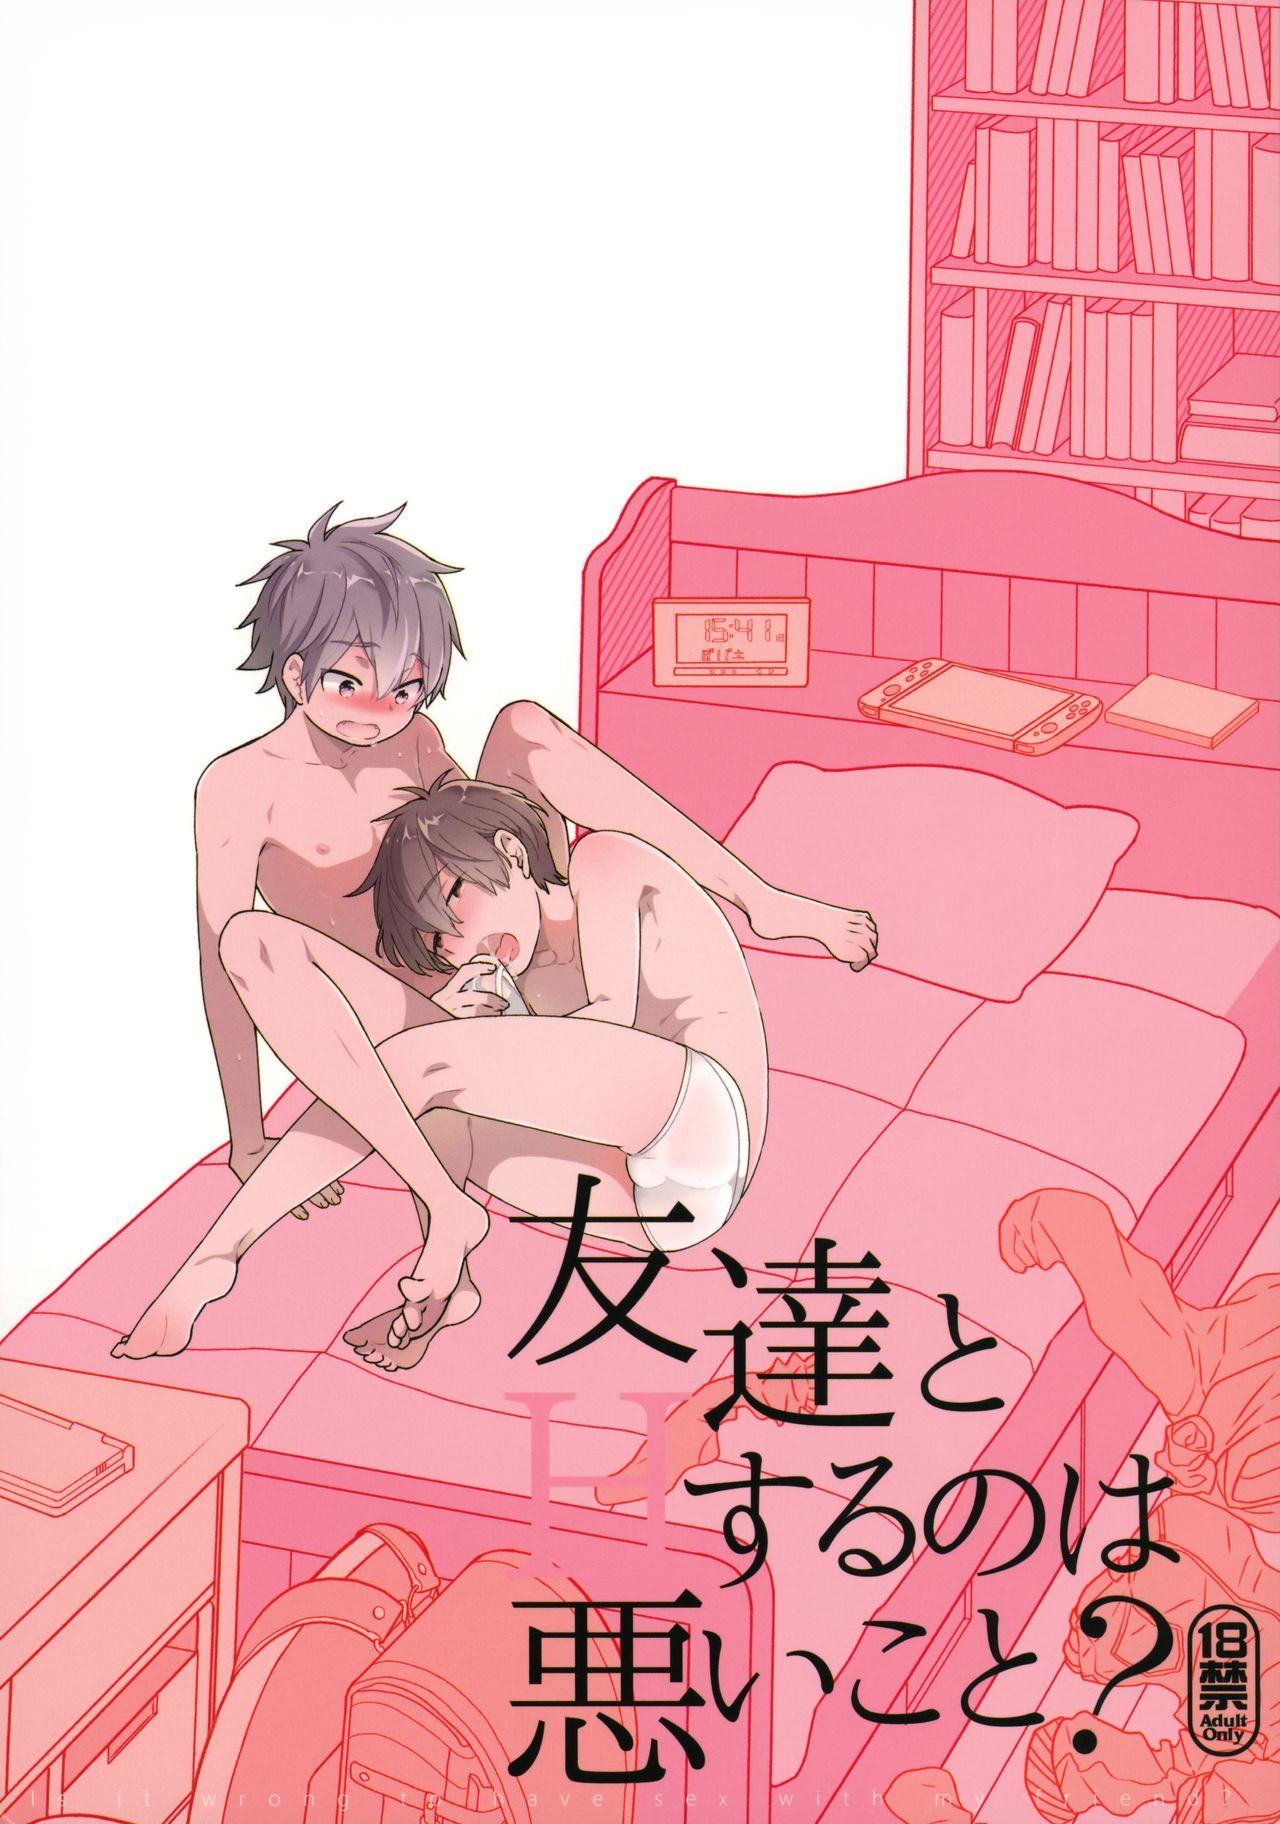 Pornstars Tomodachi to Suru no wa Warui Koto? - Is it wrong to have sex with my friend? - Original Young Men - Picture 1